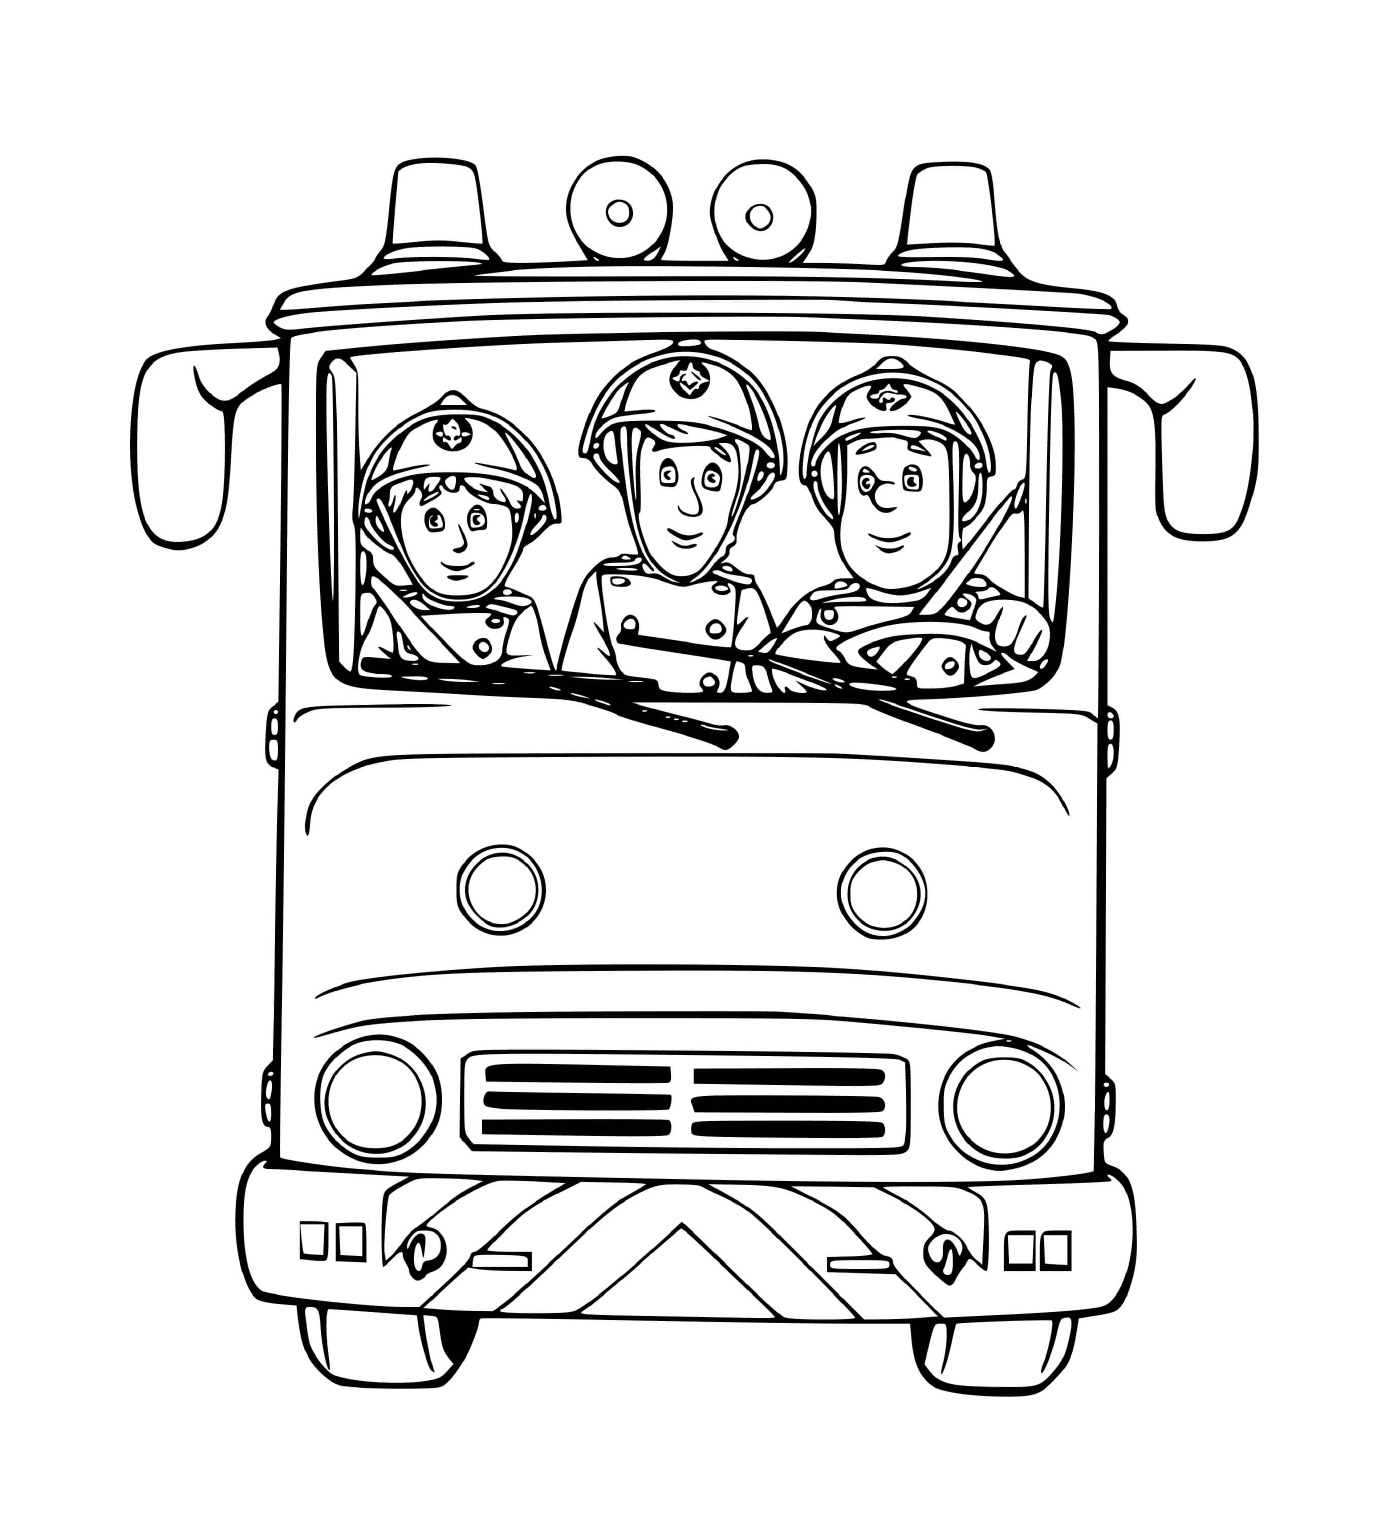  Feuerwehrwagen, drei Feuerwehrleute bereit 